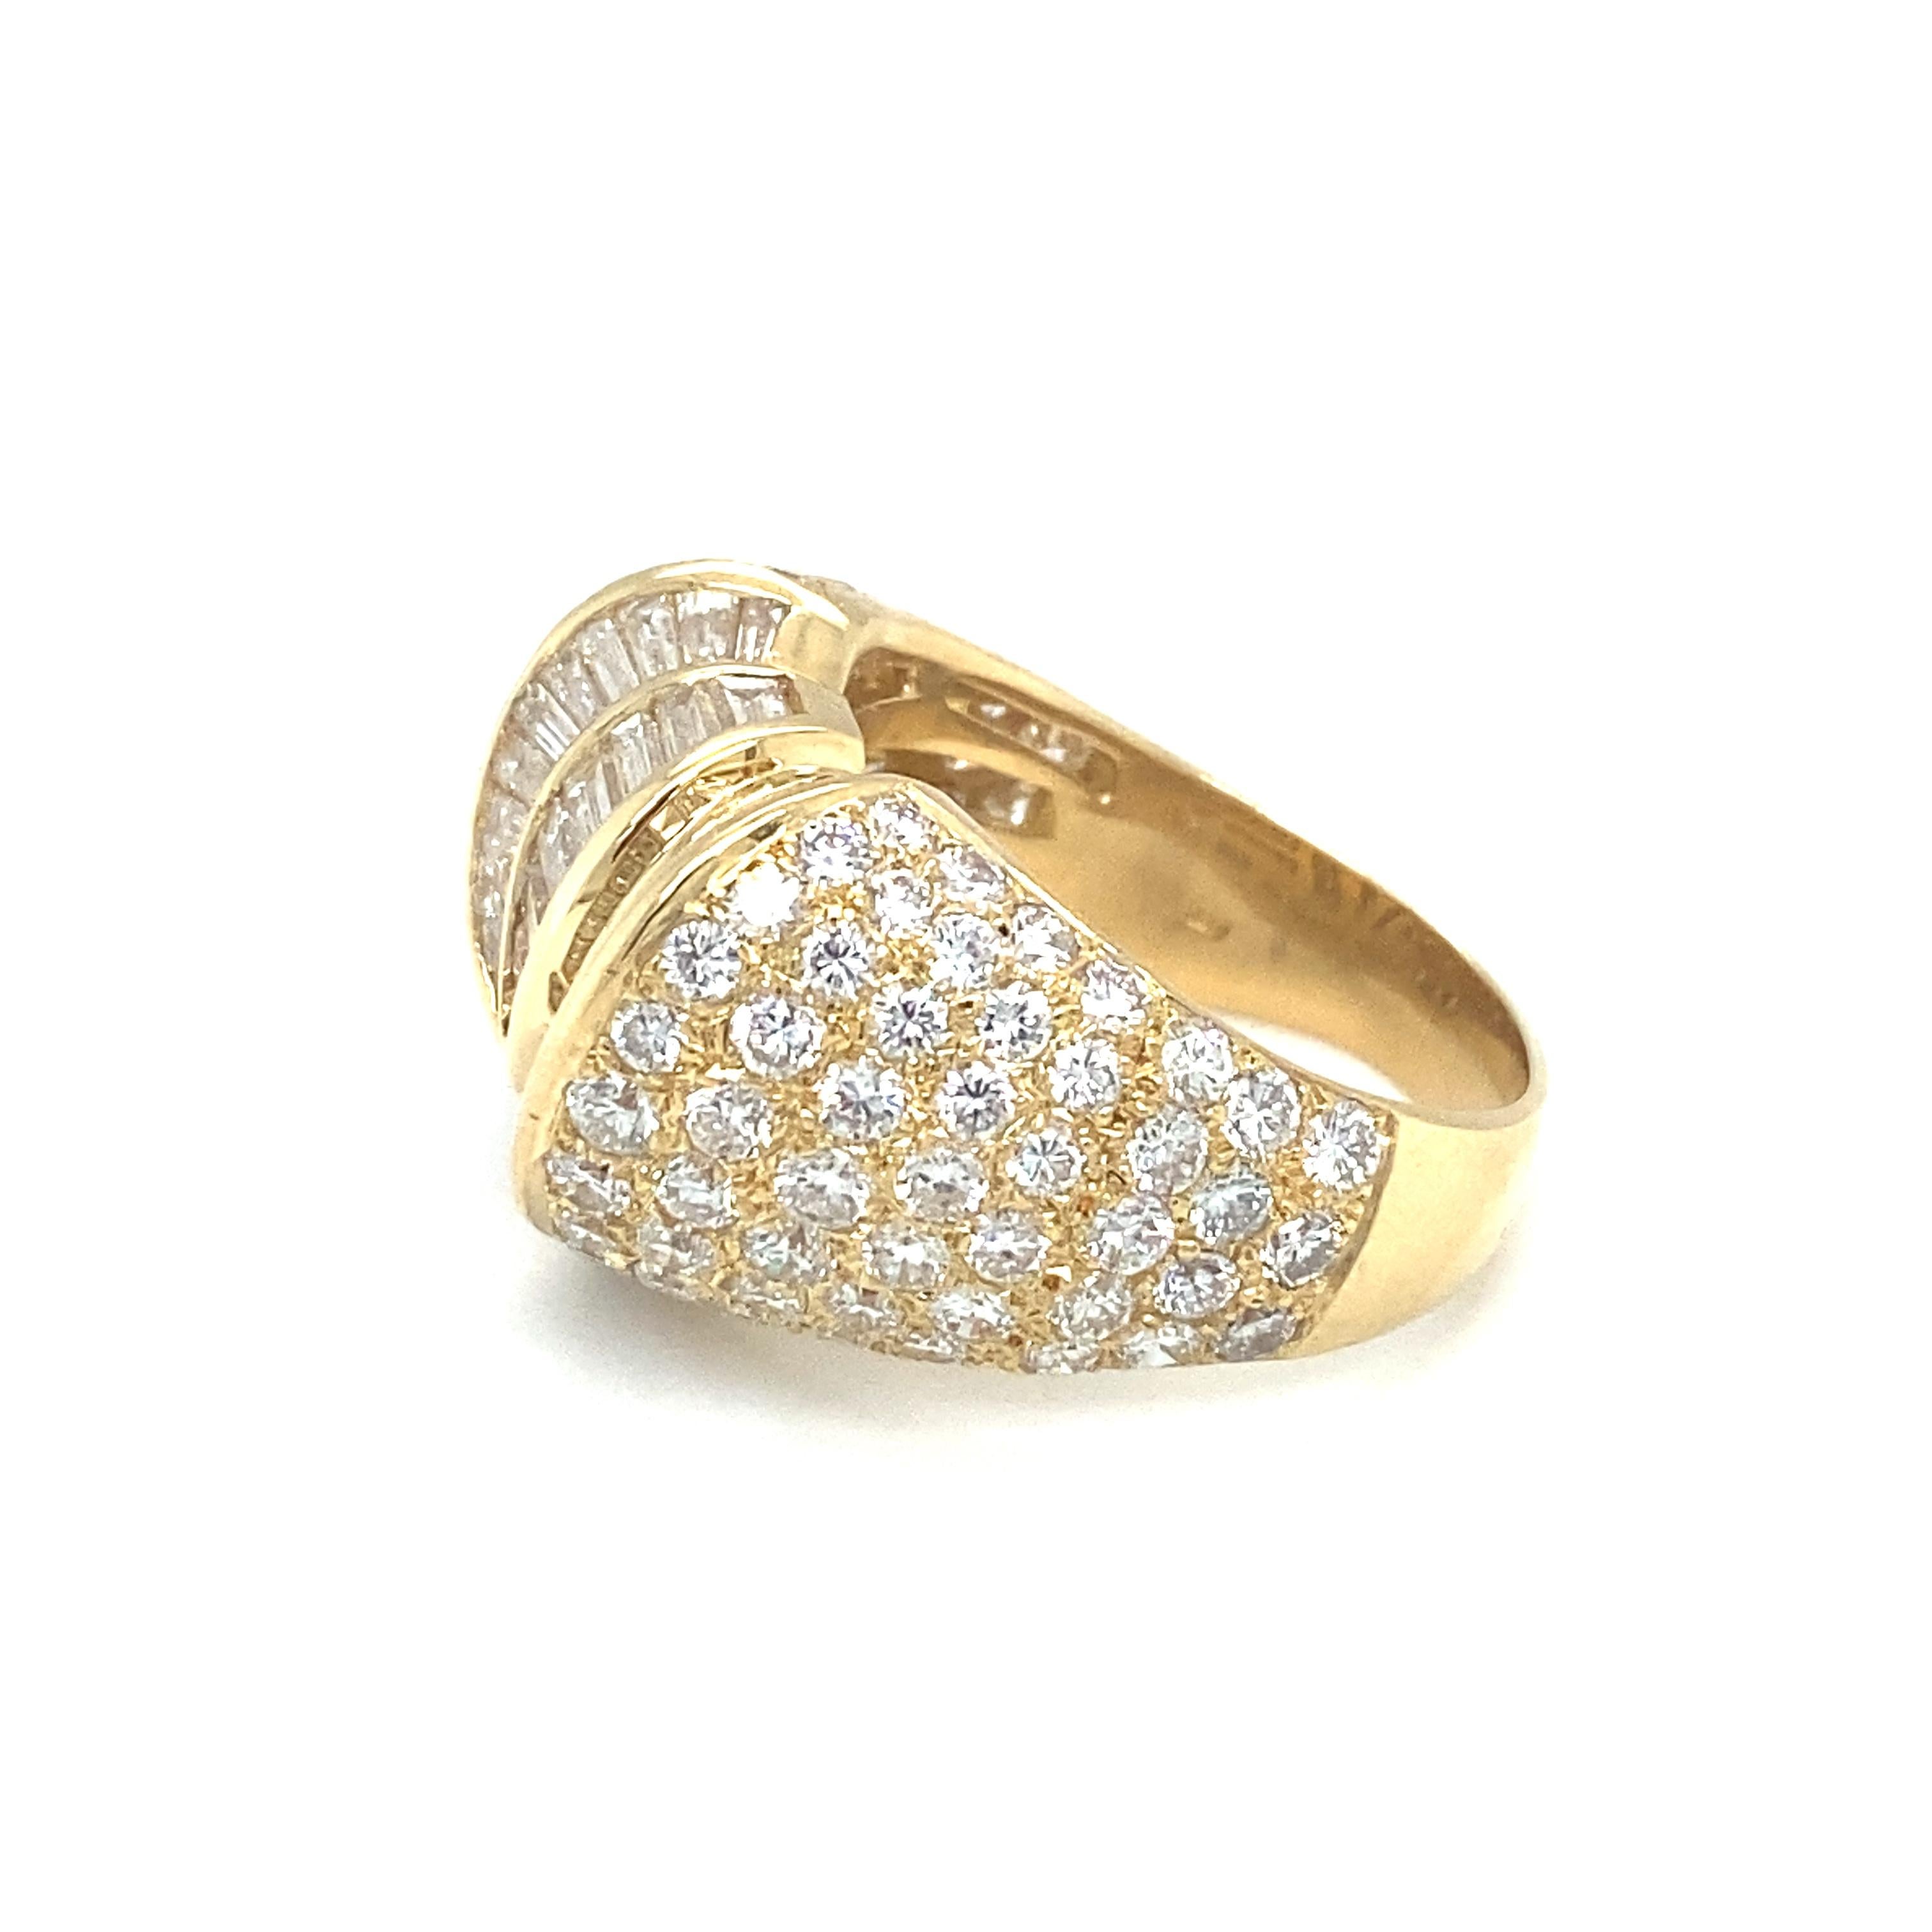 Baguette Cut Circa 1980s 7.0 Ctw Diamond Statement Ring in 18K Gold